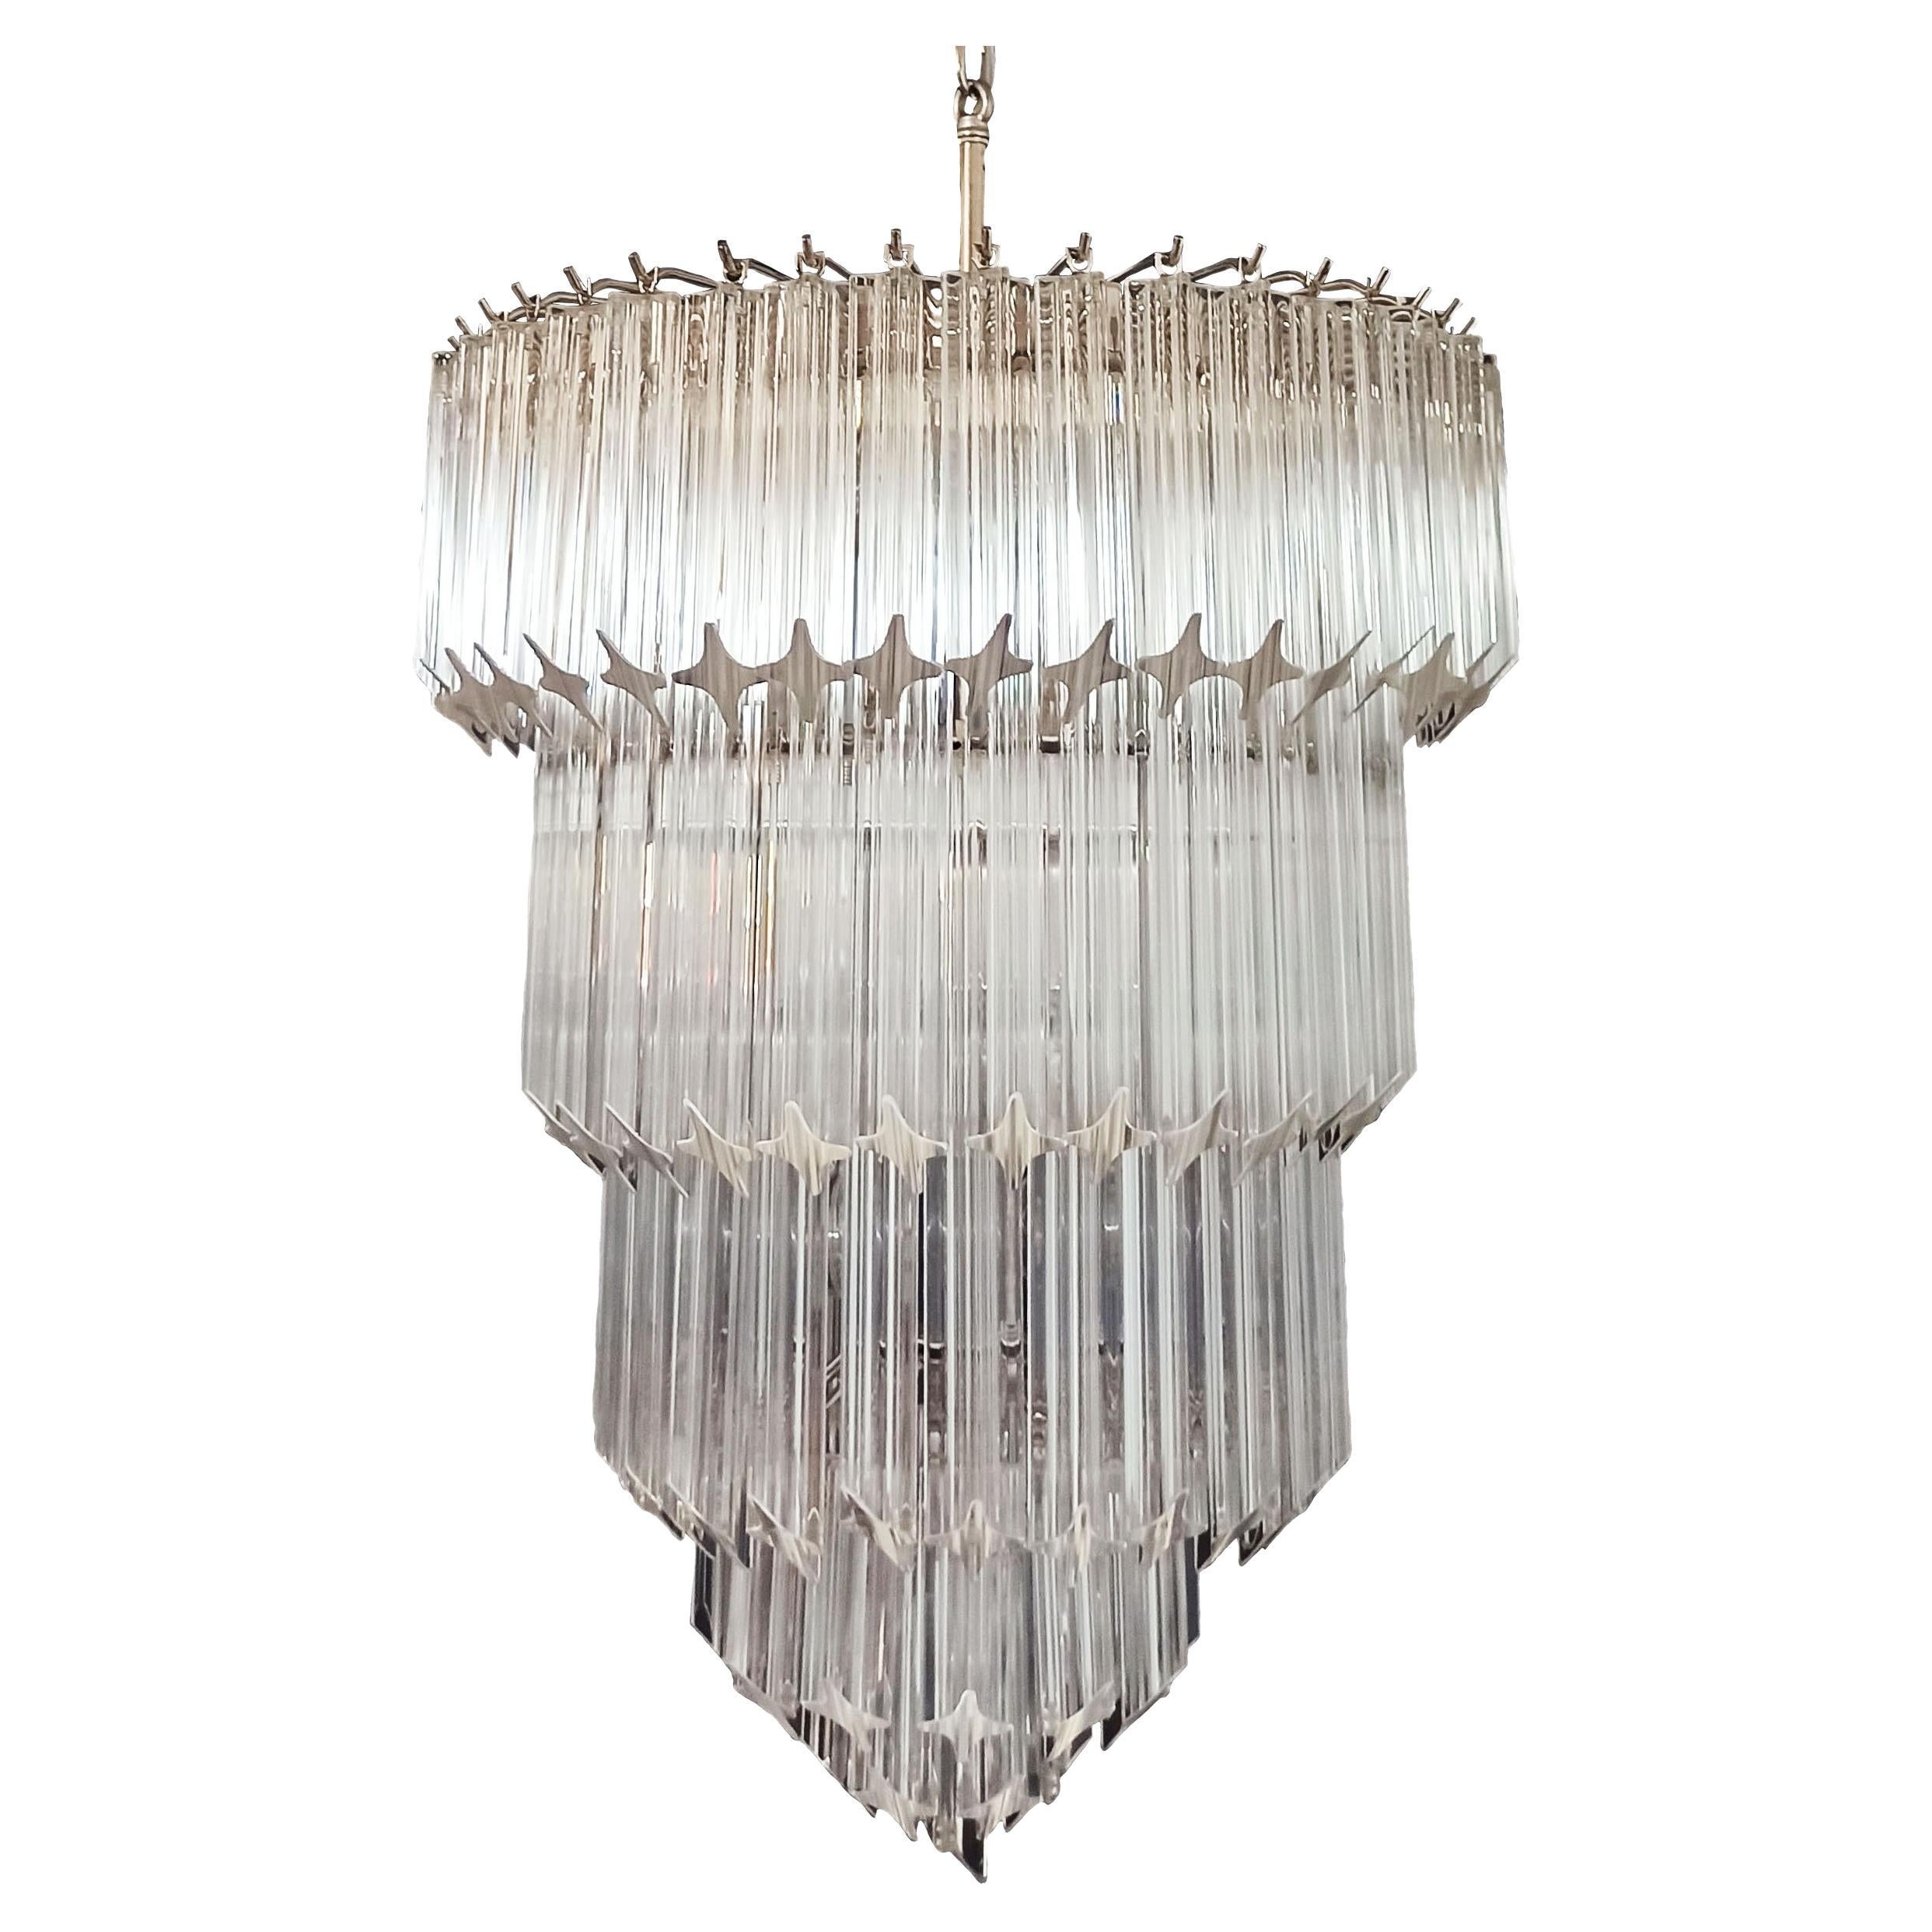 Elegant Stylish Murano glass chandelier - 112 transparent quadriedri For Sale